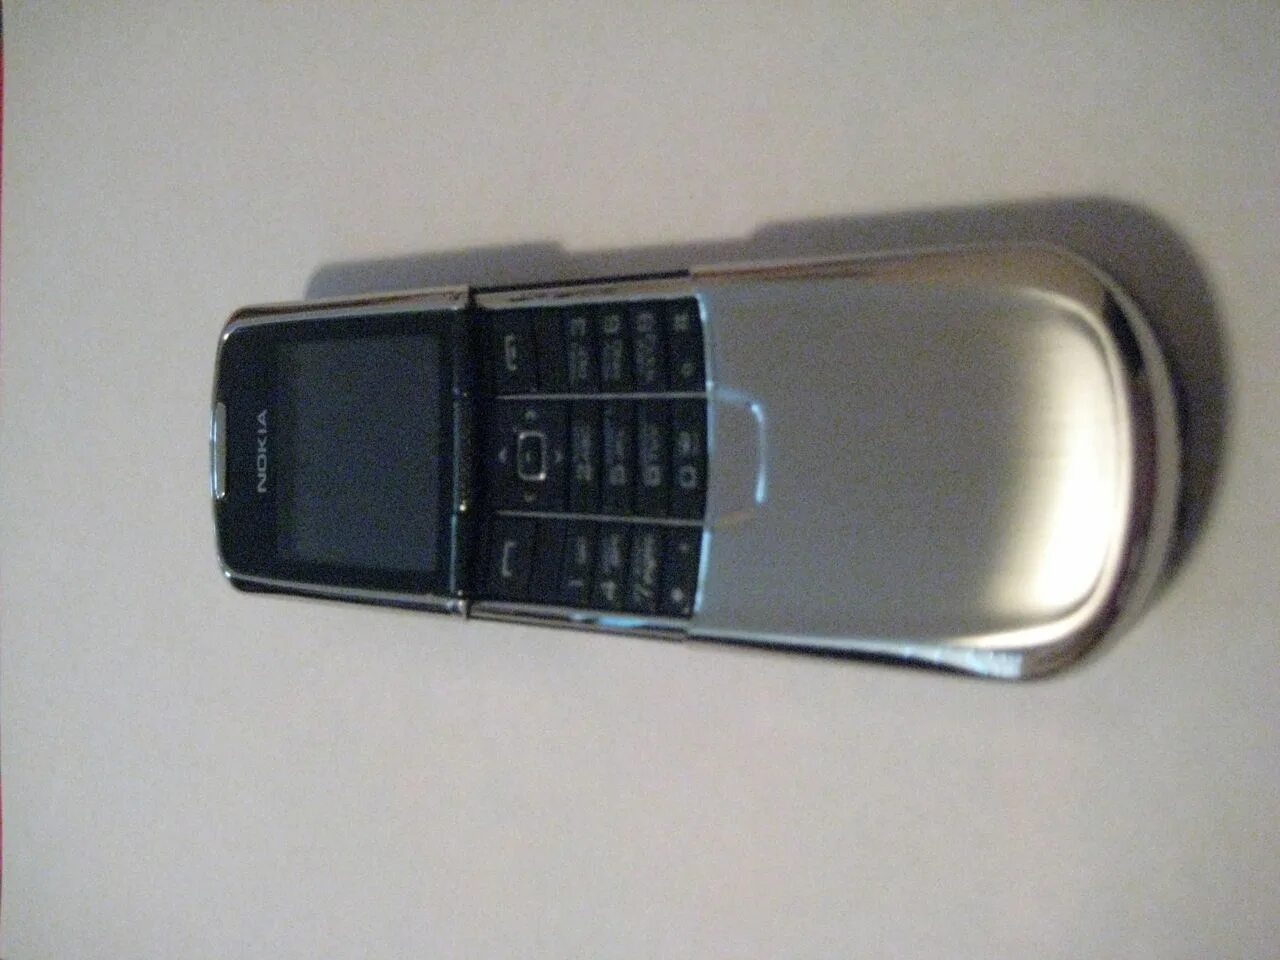 Нокиа Железный корпус 61. Nokia с железной крышкой спереди.